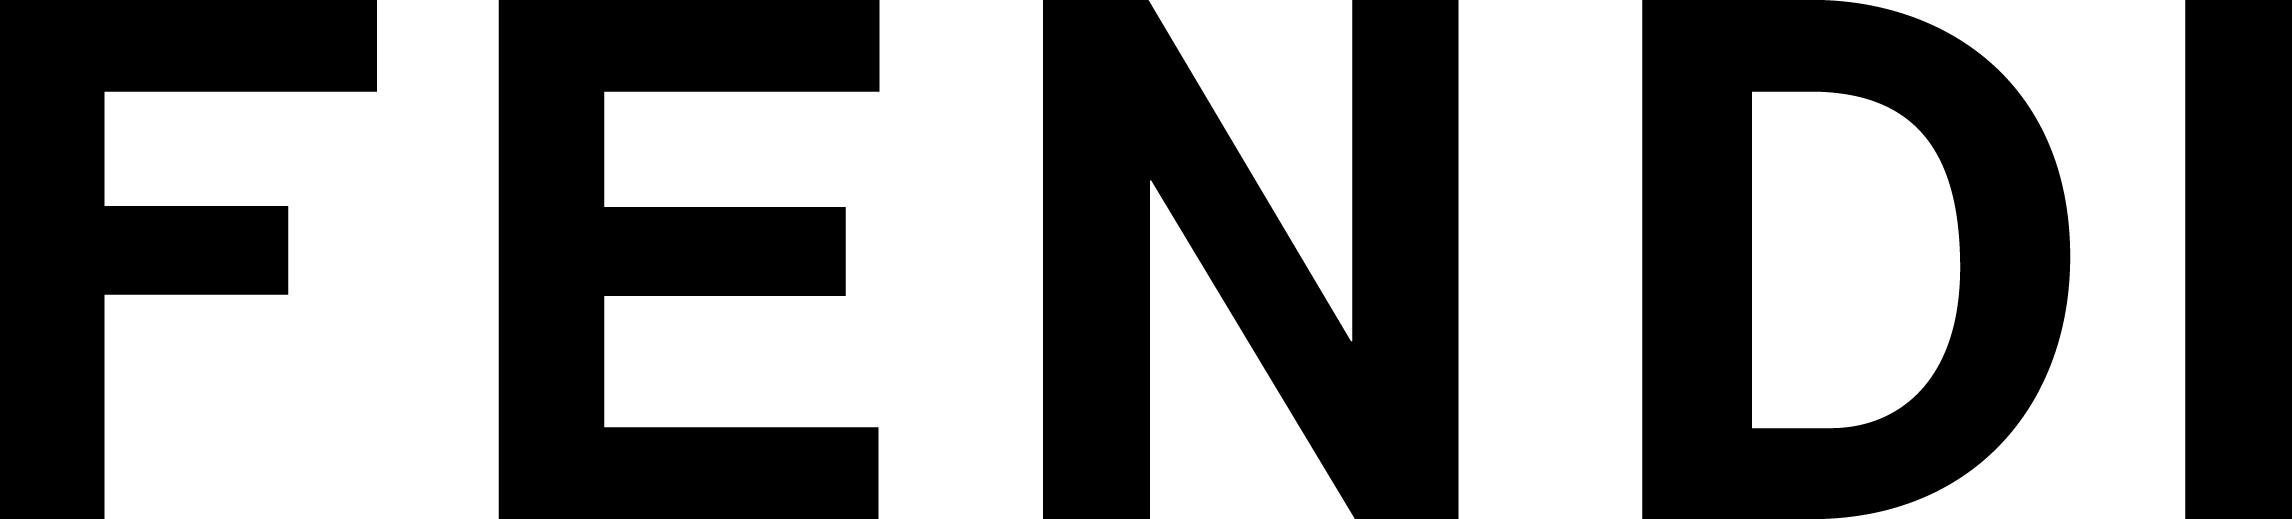 Фенди логотип